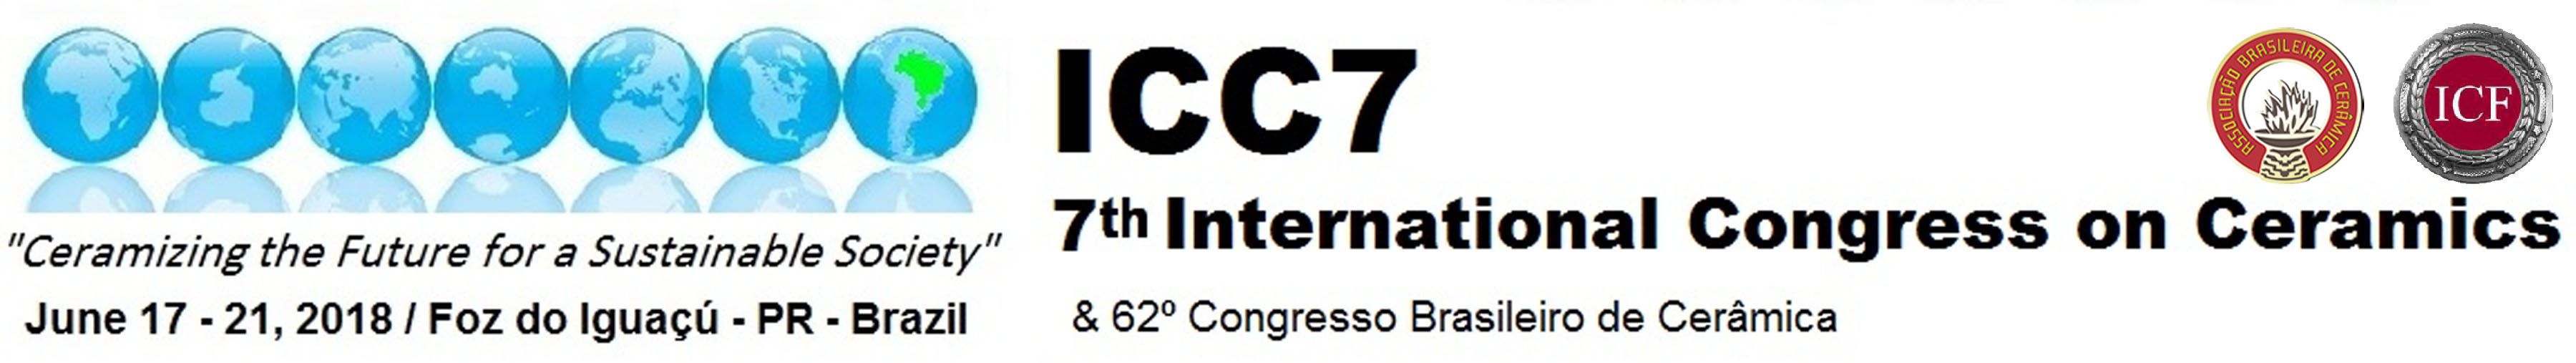 Logo ICC 7